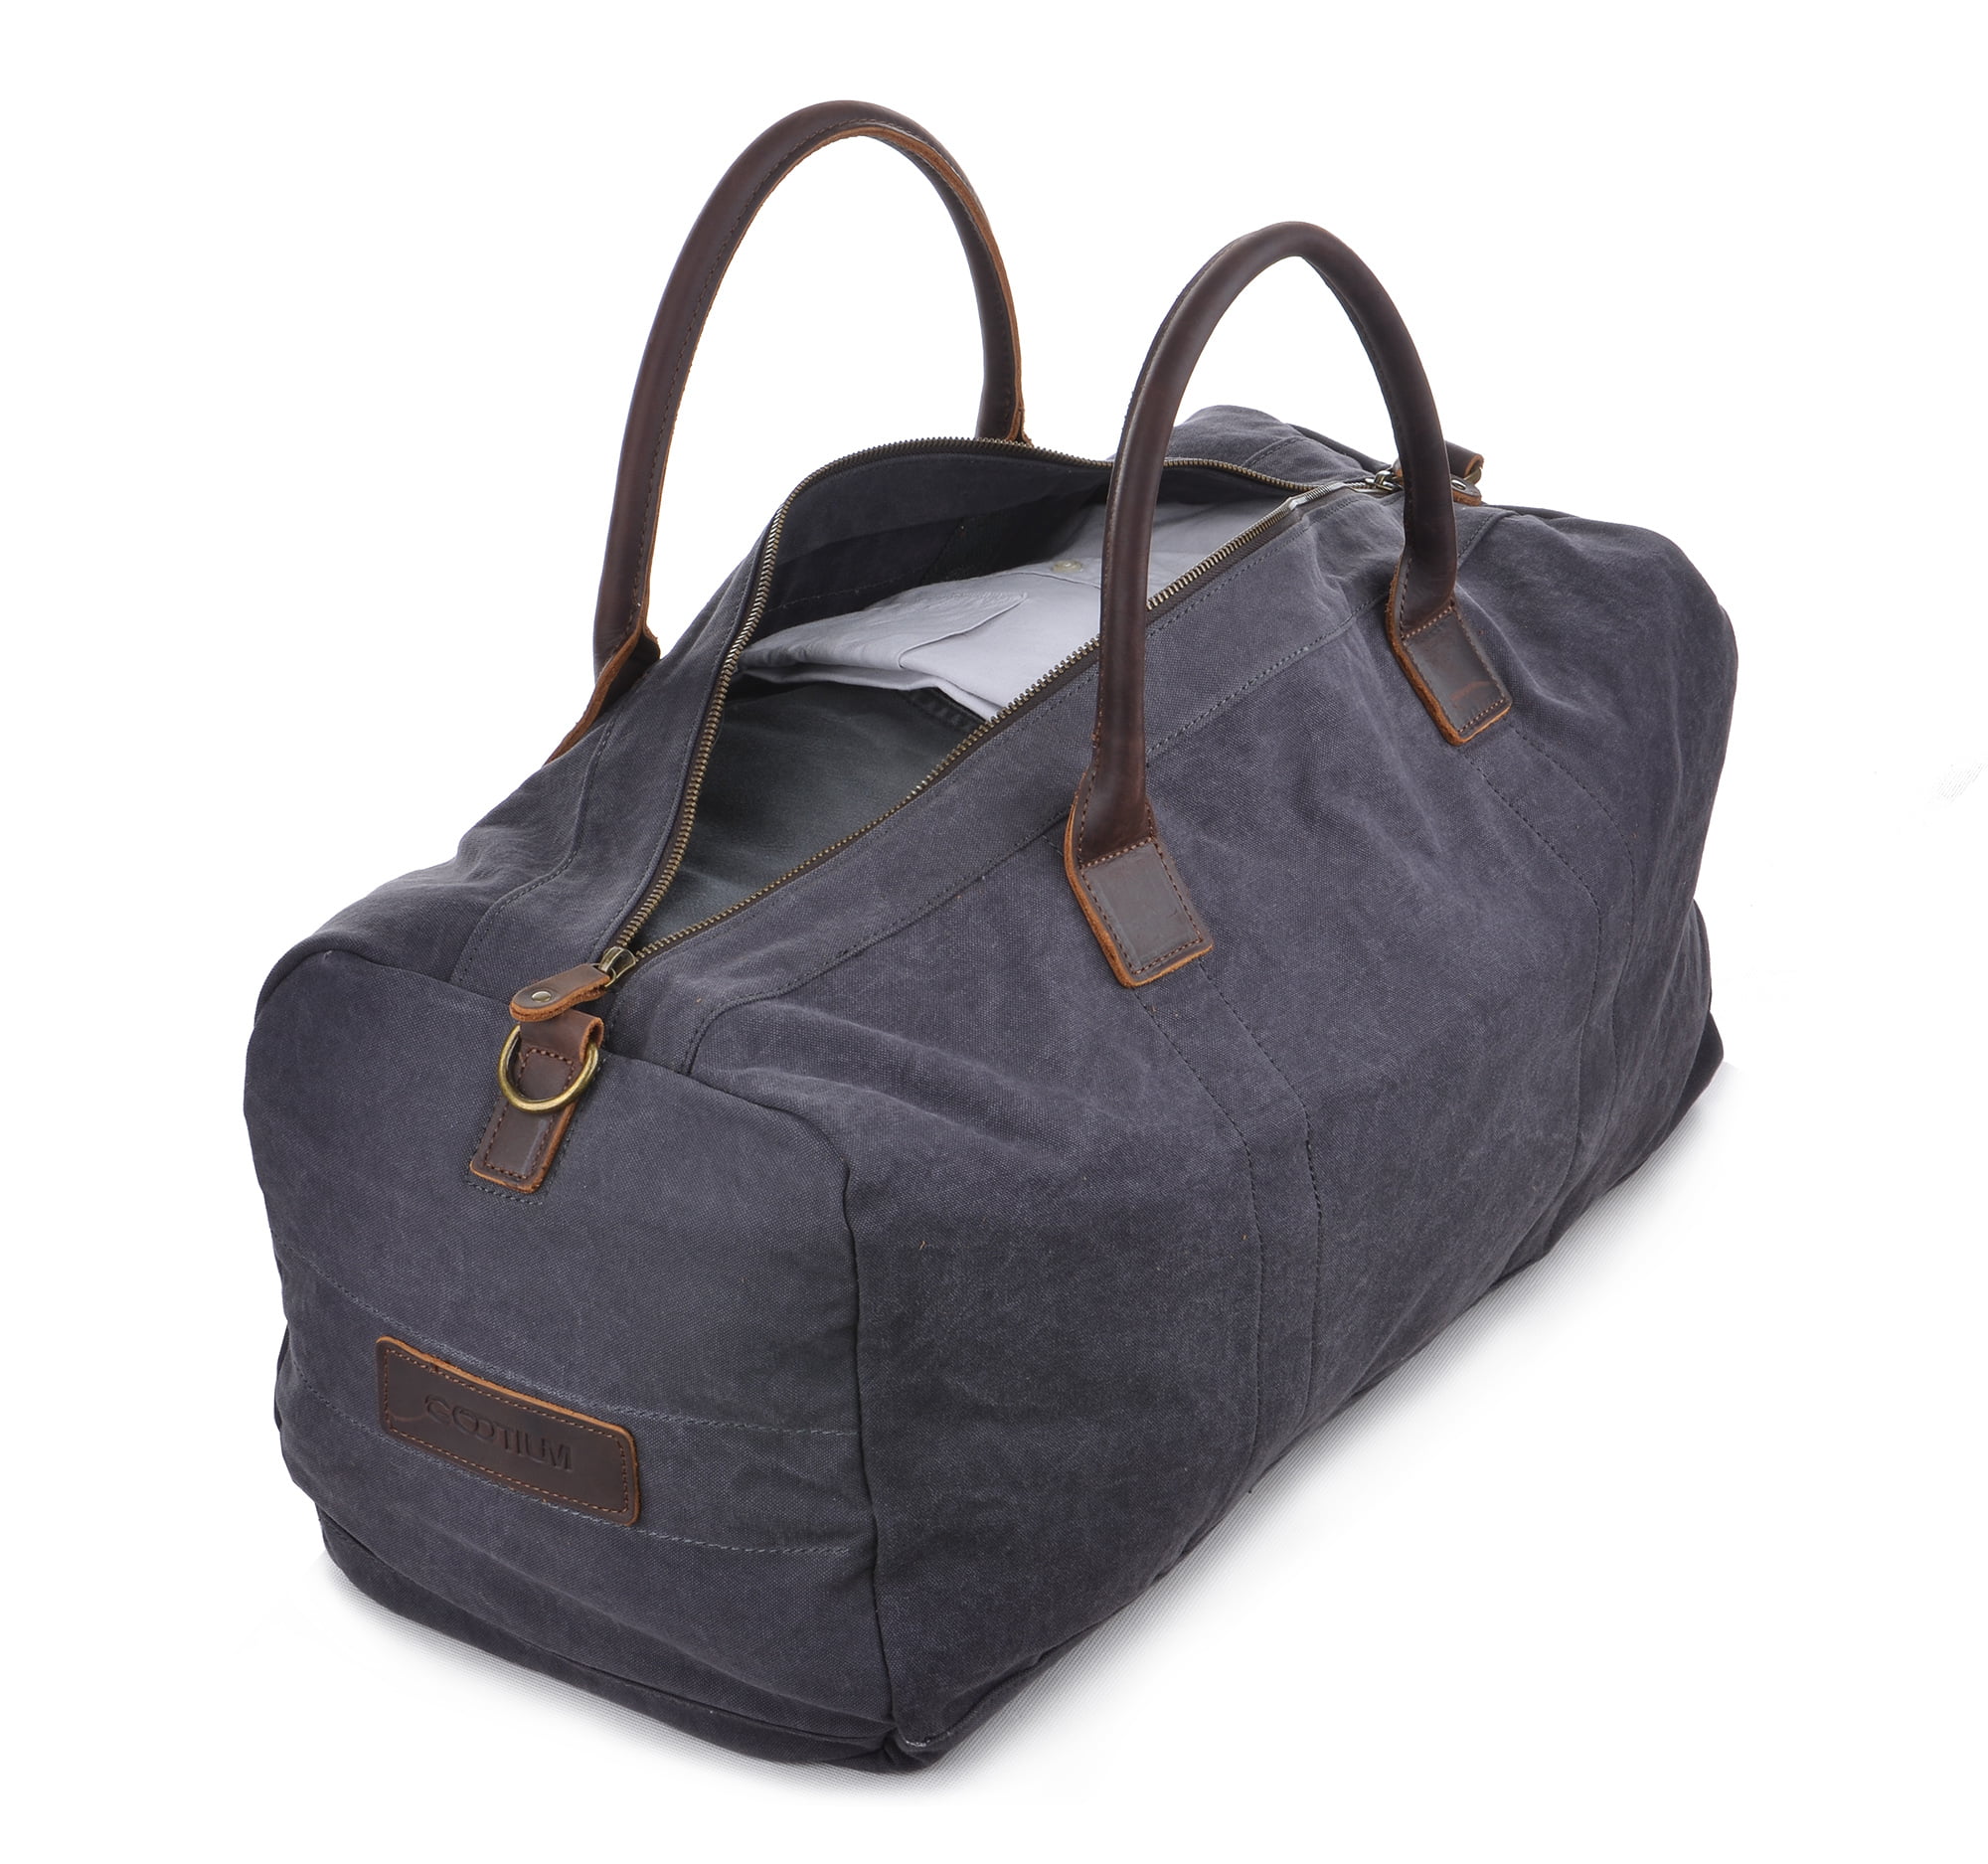 Gootium Canvas Travel Duffel Bag Carry-on Weekend Bag, Oversized, Grey | Walmart Canada